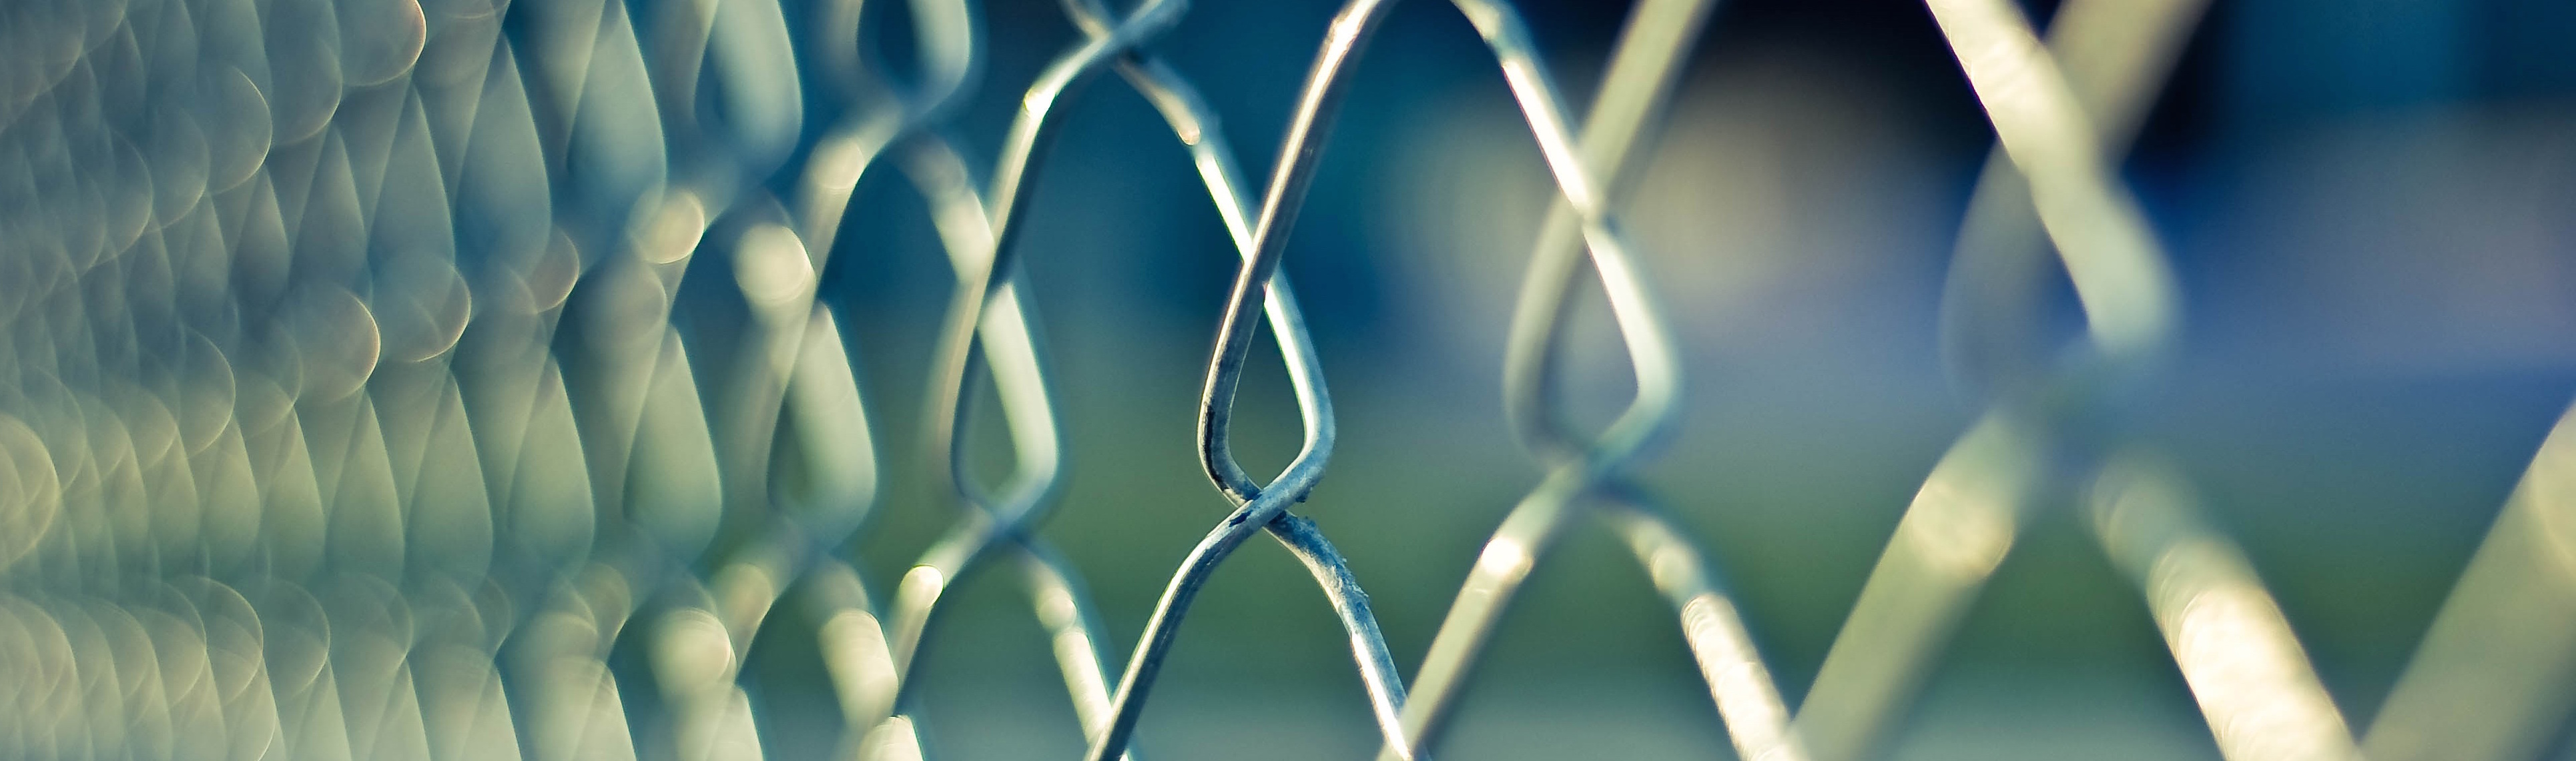 Immigration Detention Fence